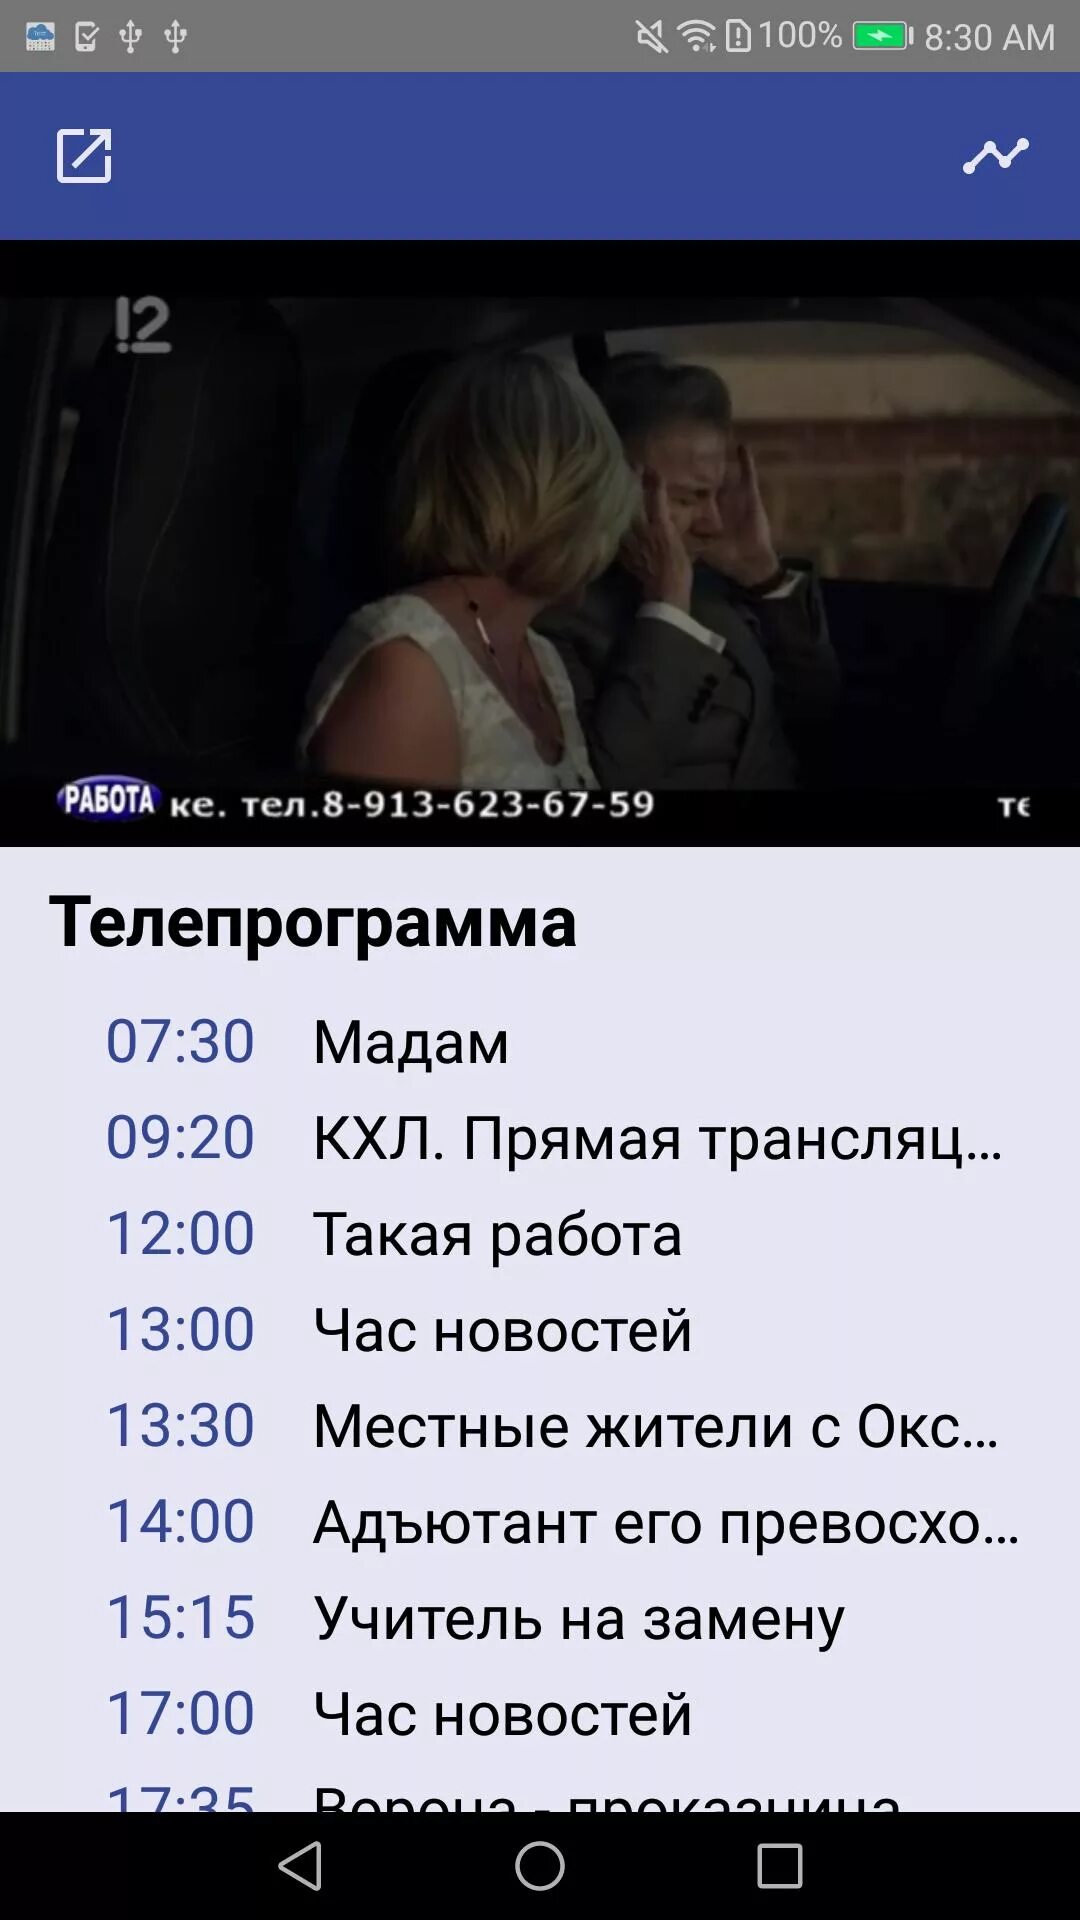 Телепередача на 12 канал на сегодня. 12 Канал Омск. Телеканал ОРТРК 12 канал. Программа Омск. ТВ программа Омск.